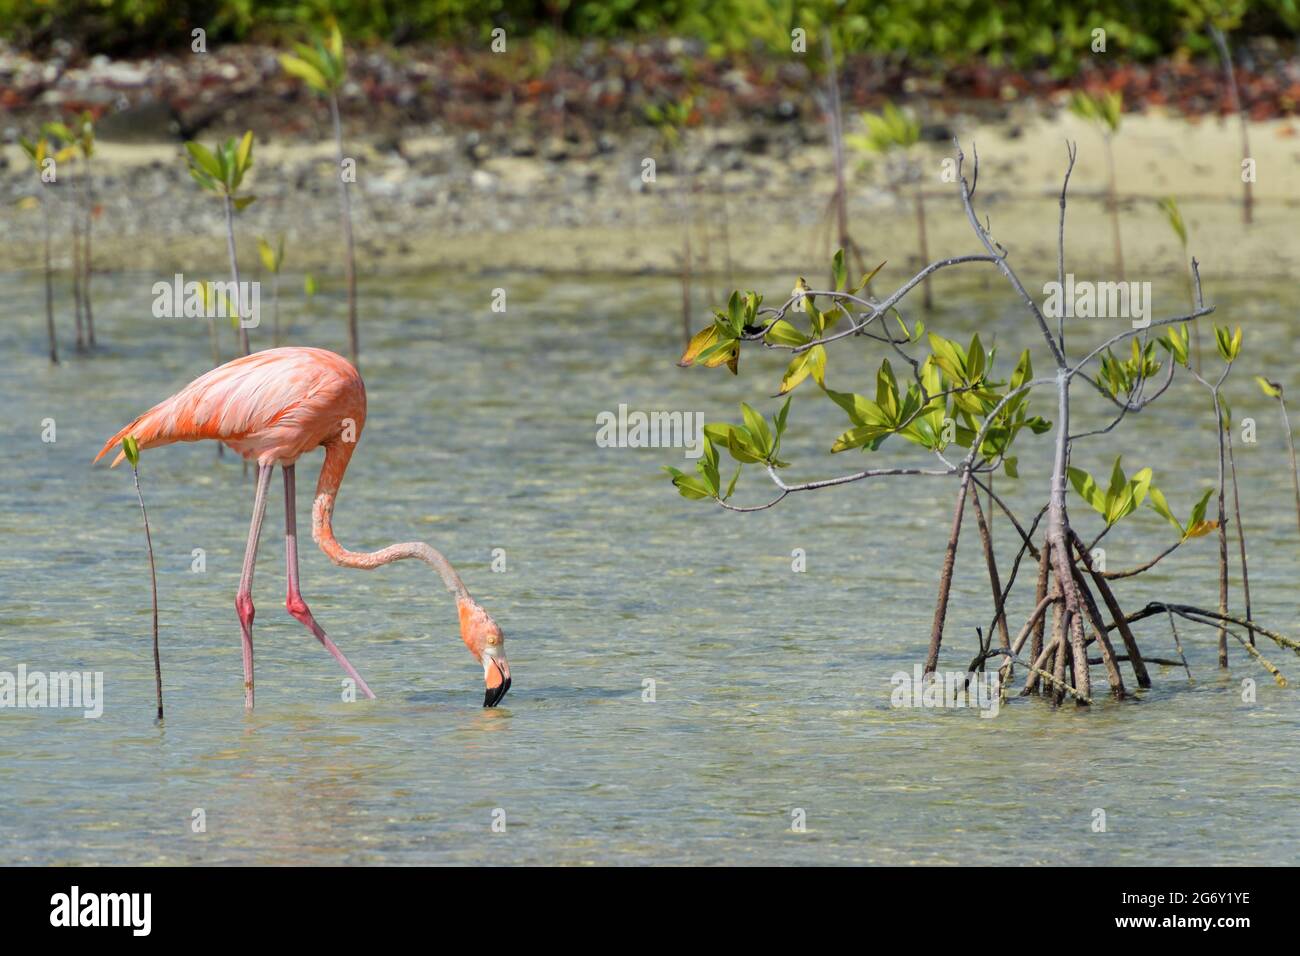 American or Caribbean flamingo (Phoenicopterus ruber) foraging in water with mangrove, Bonaire, Dutch Caribbean. Stock Photo